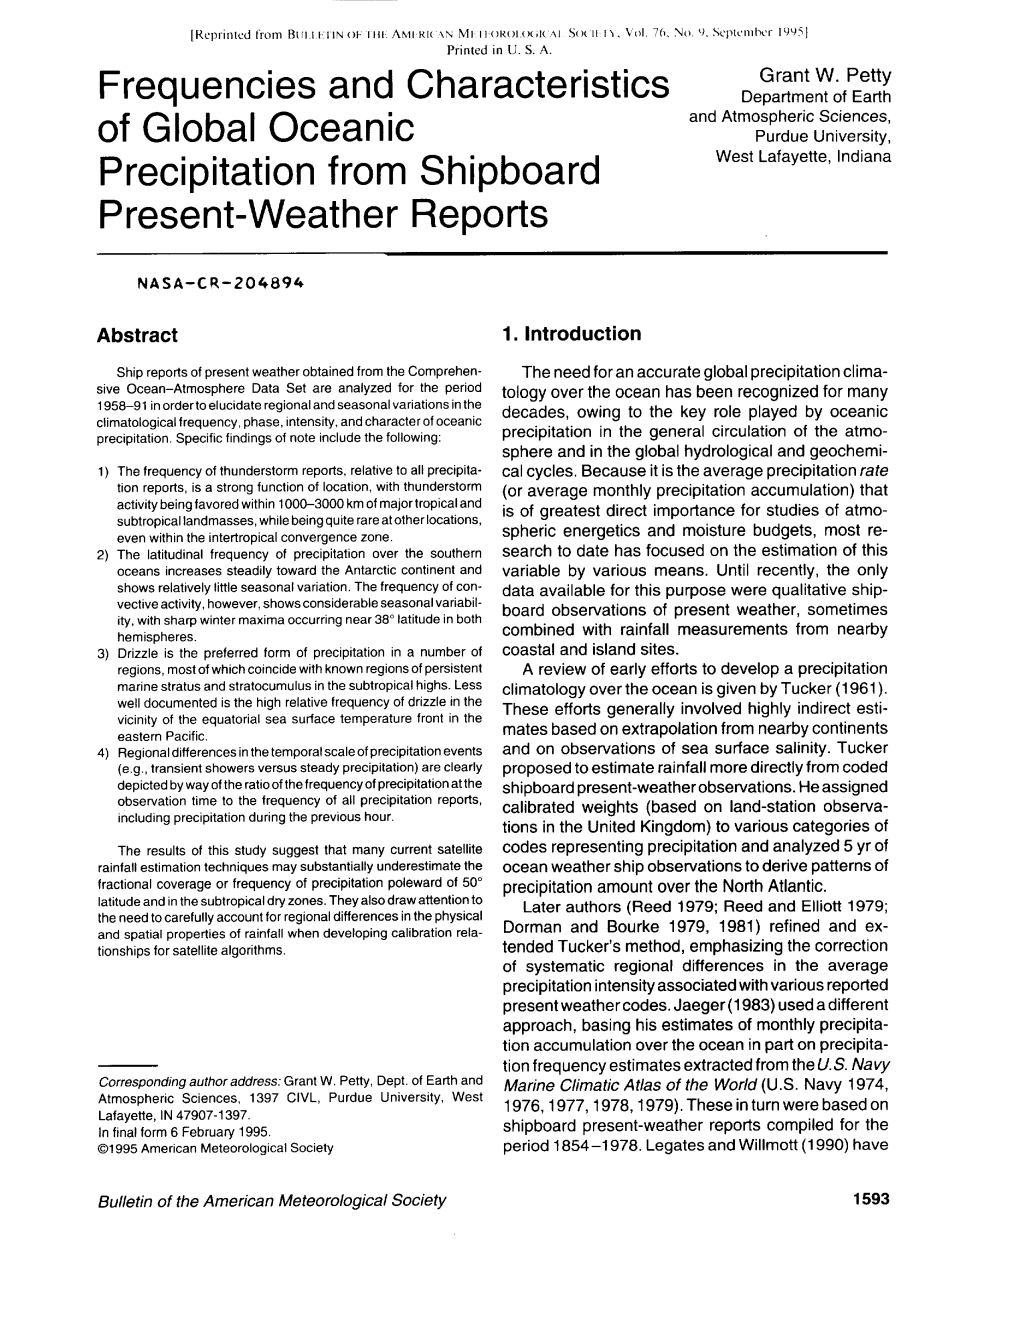 Frequencies and Characteristics of Global Oceanic Precipitation